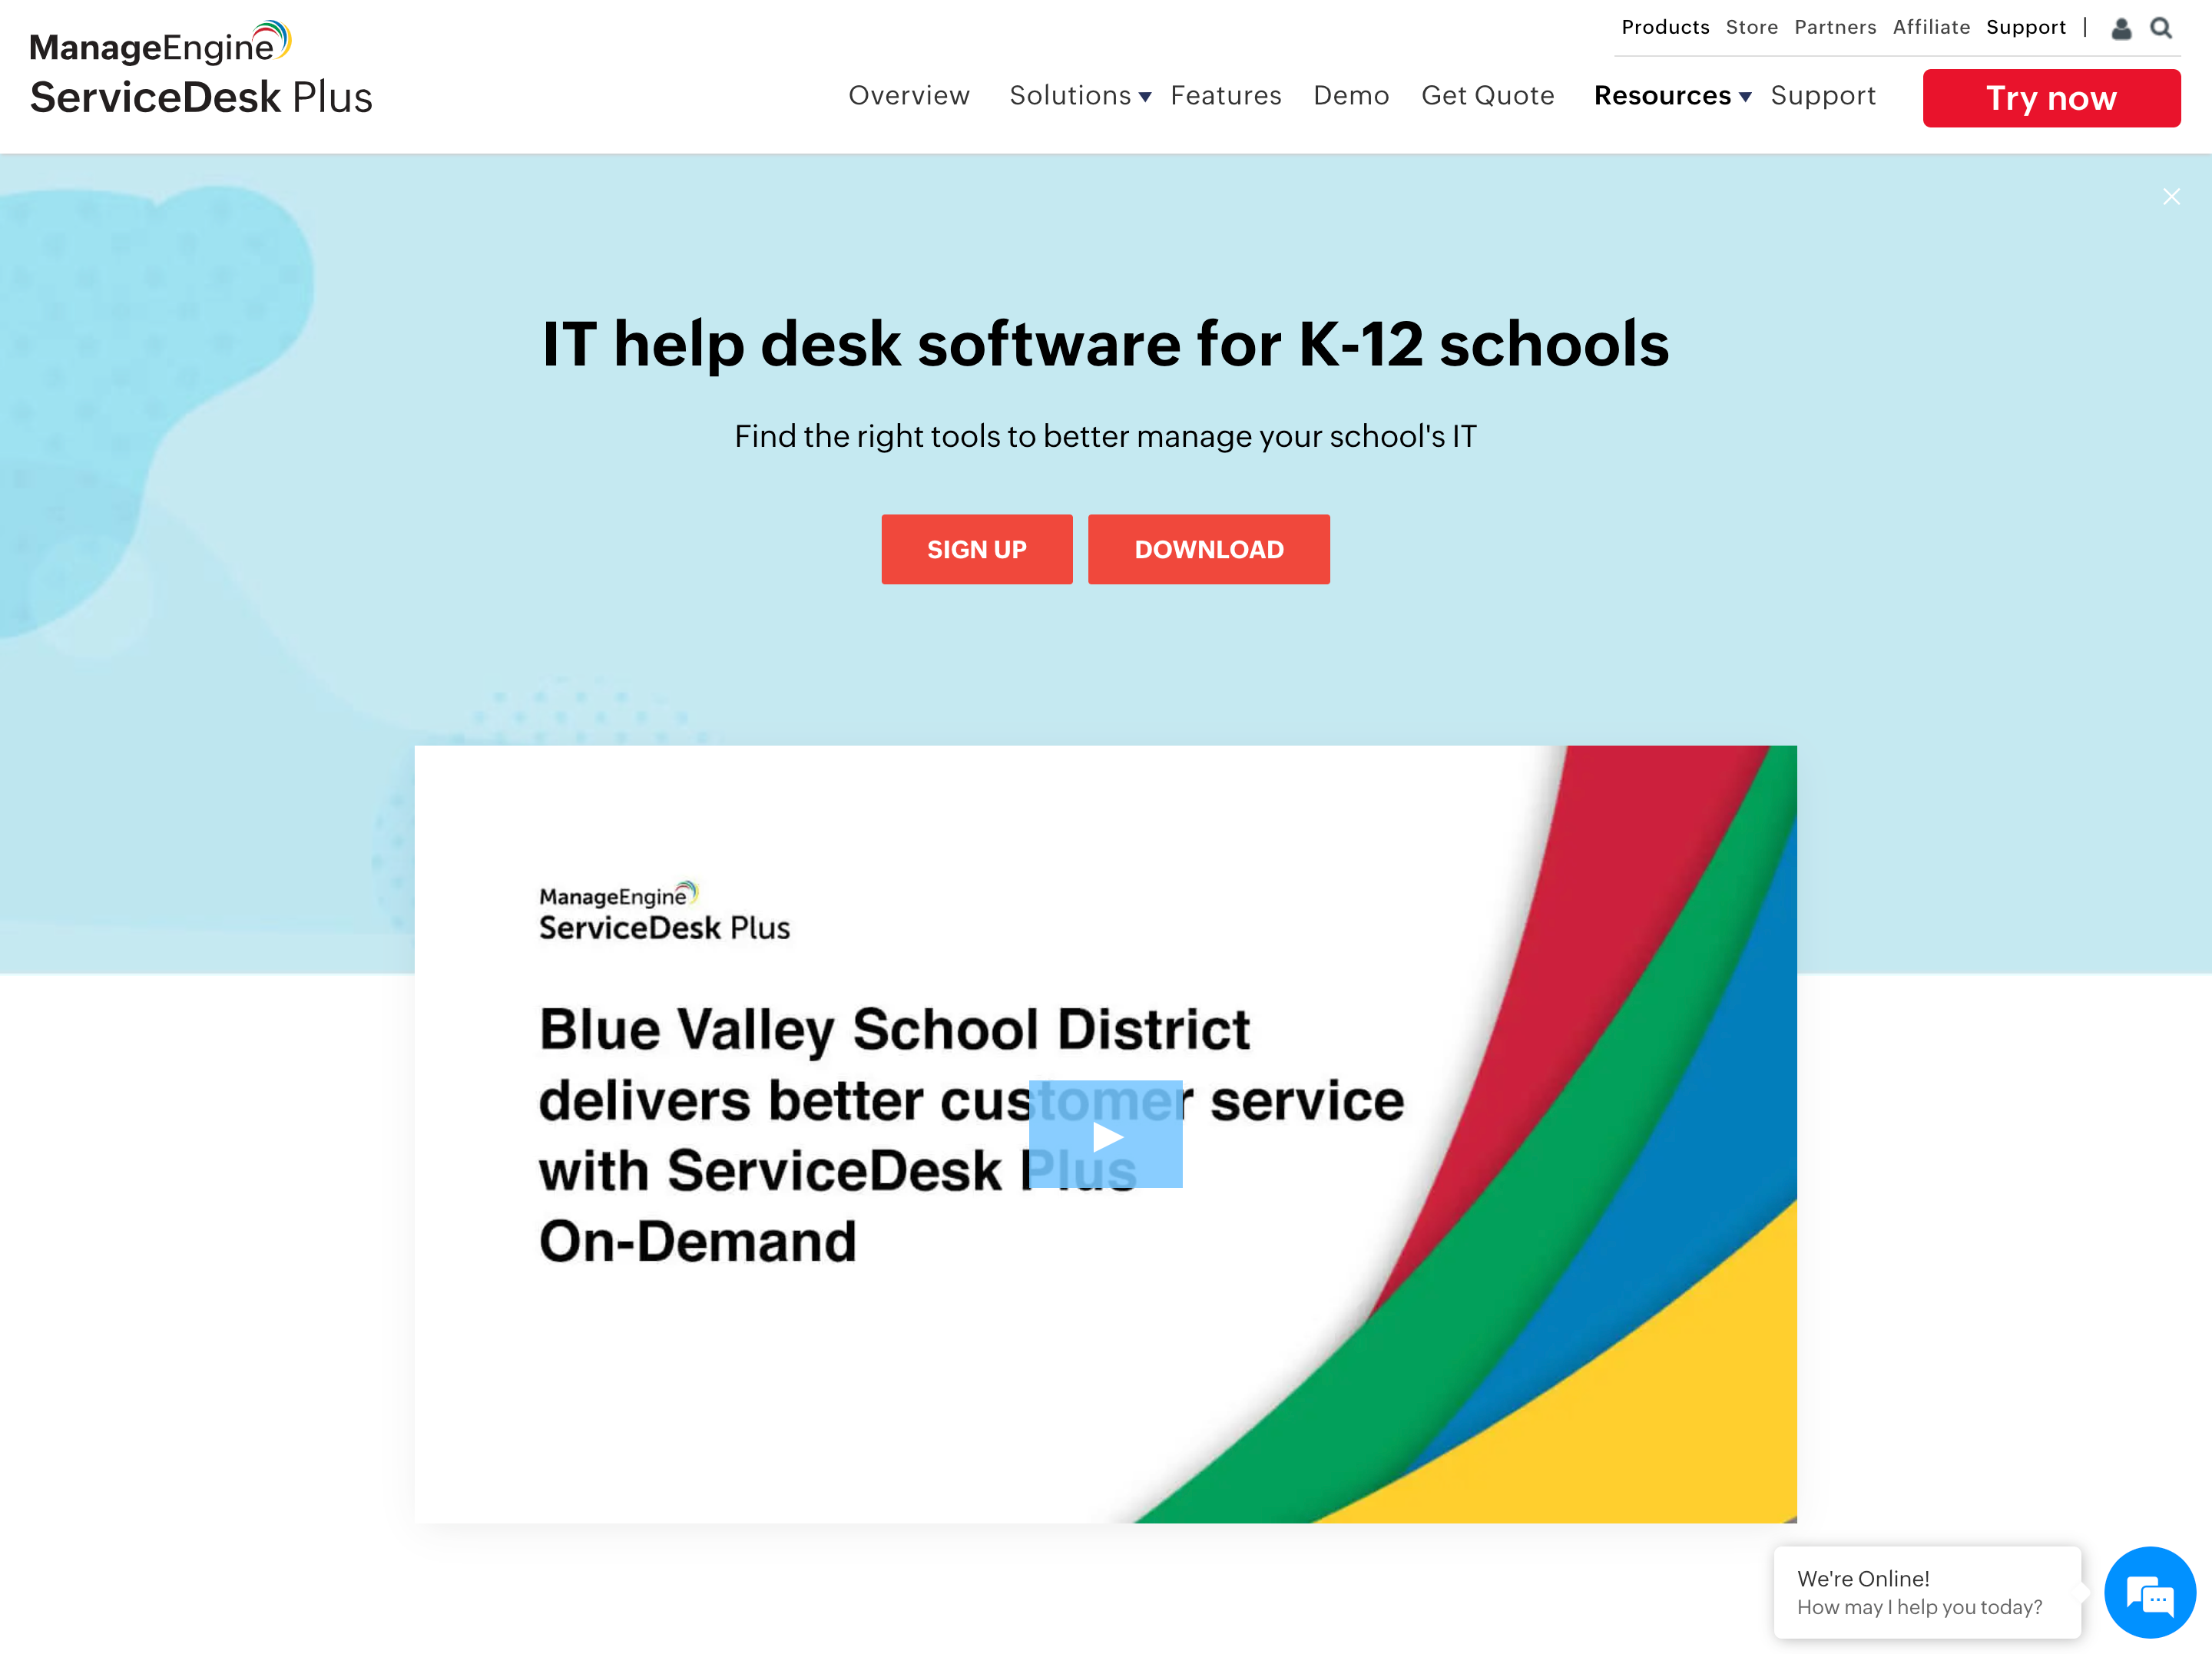 ServiceDesk plus IT help desk software for K-12 schools